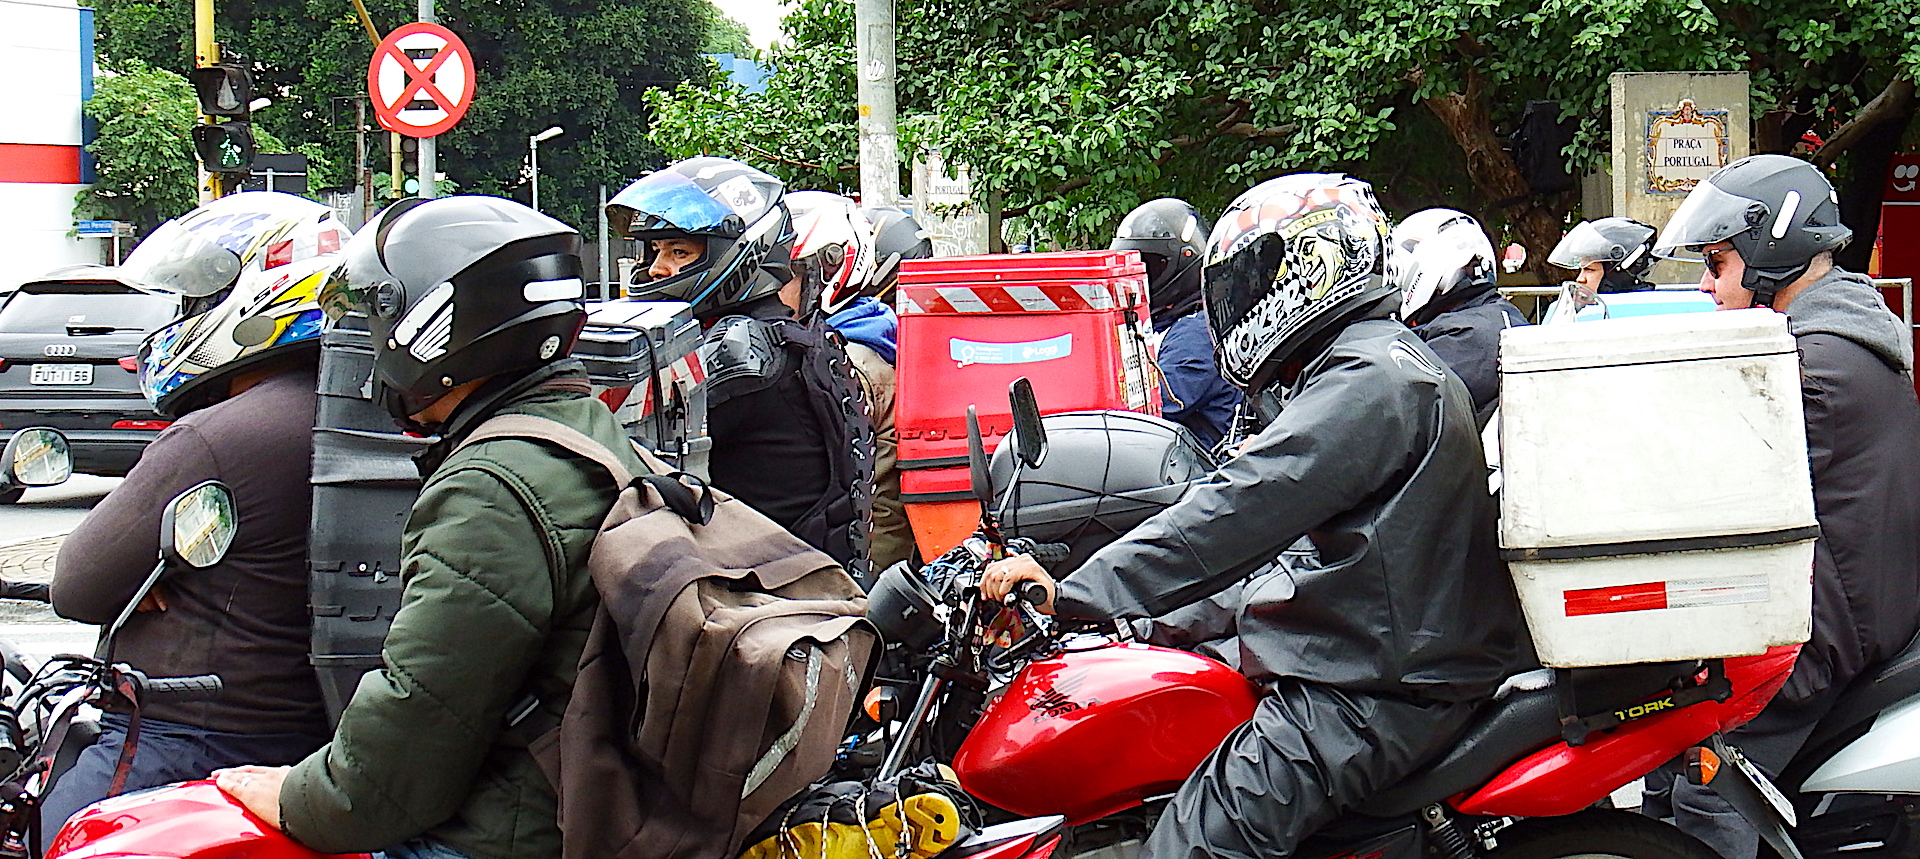 Motociclistas de Entrega com Motos no Semáforo